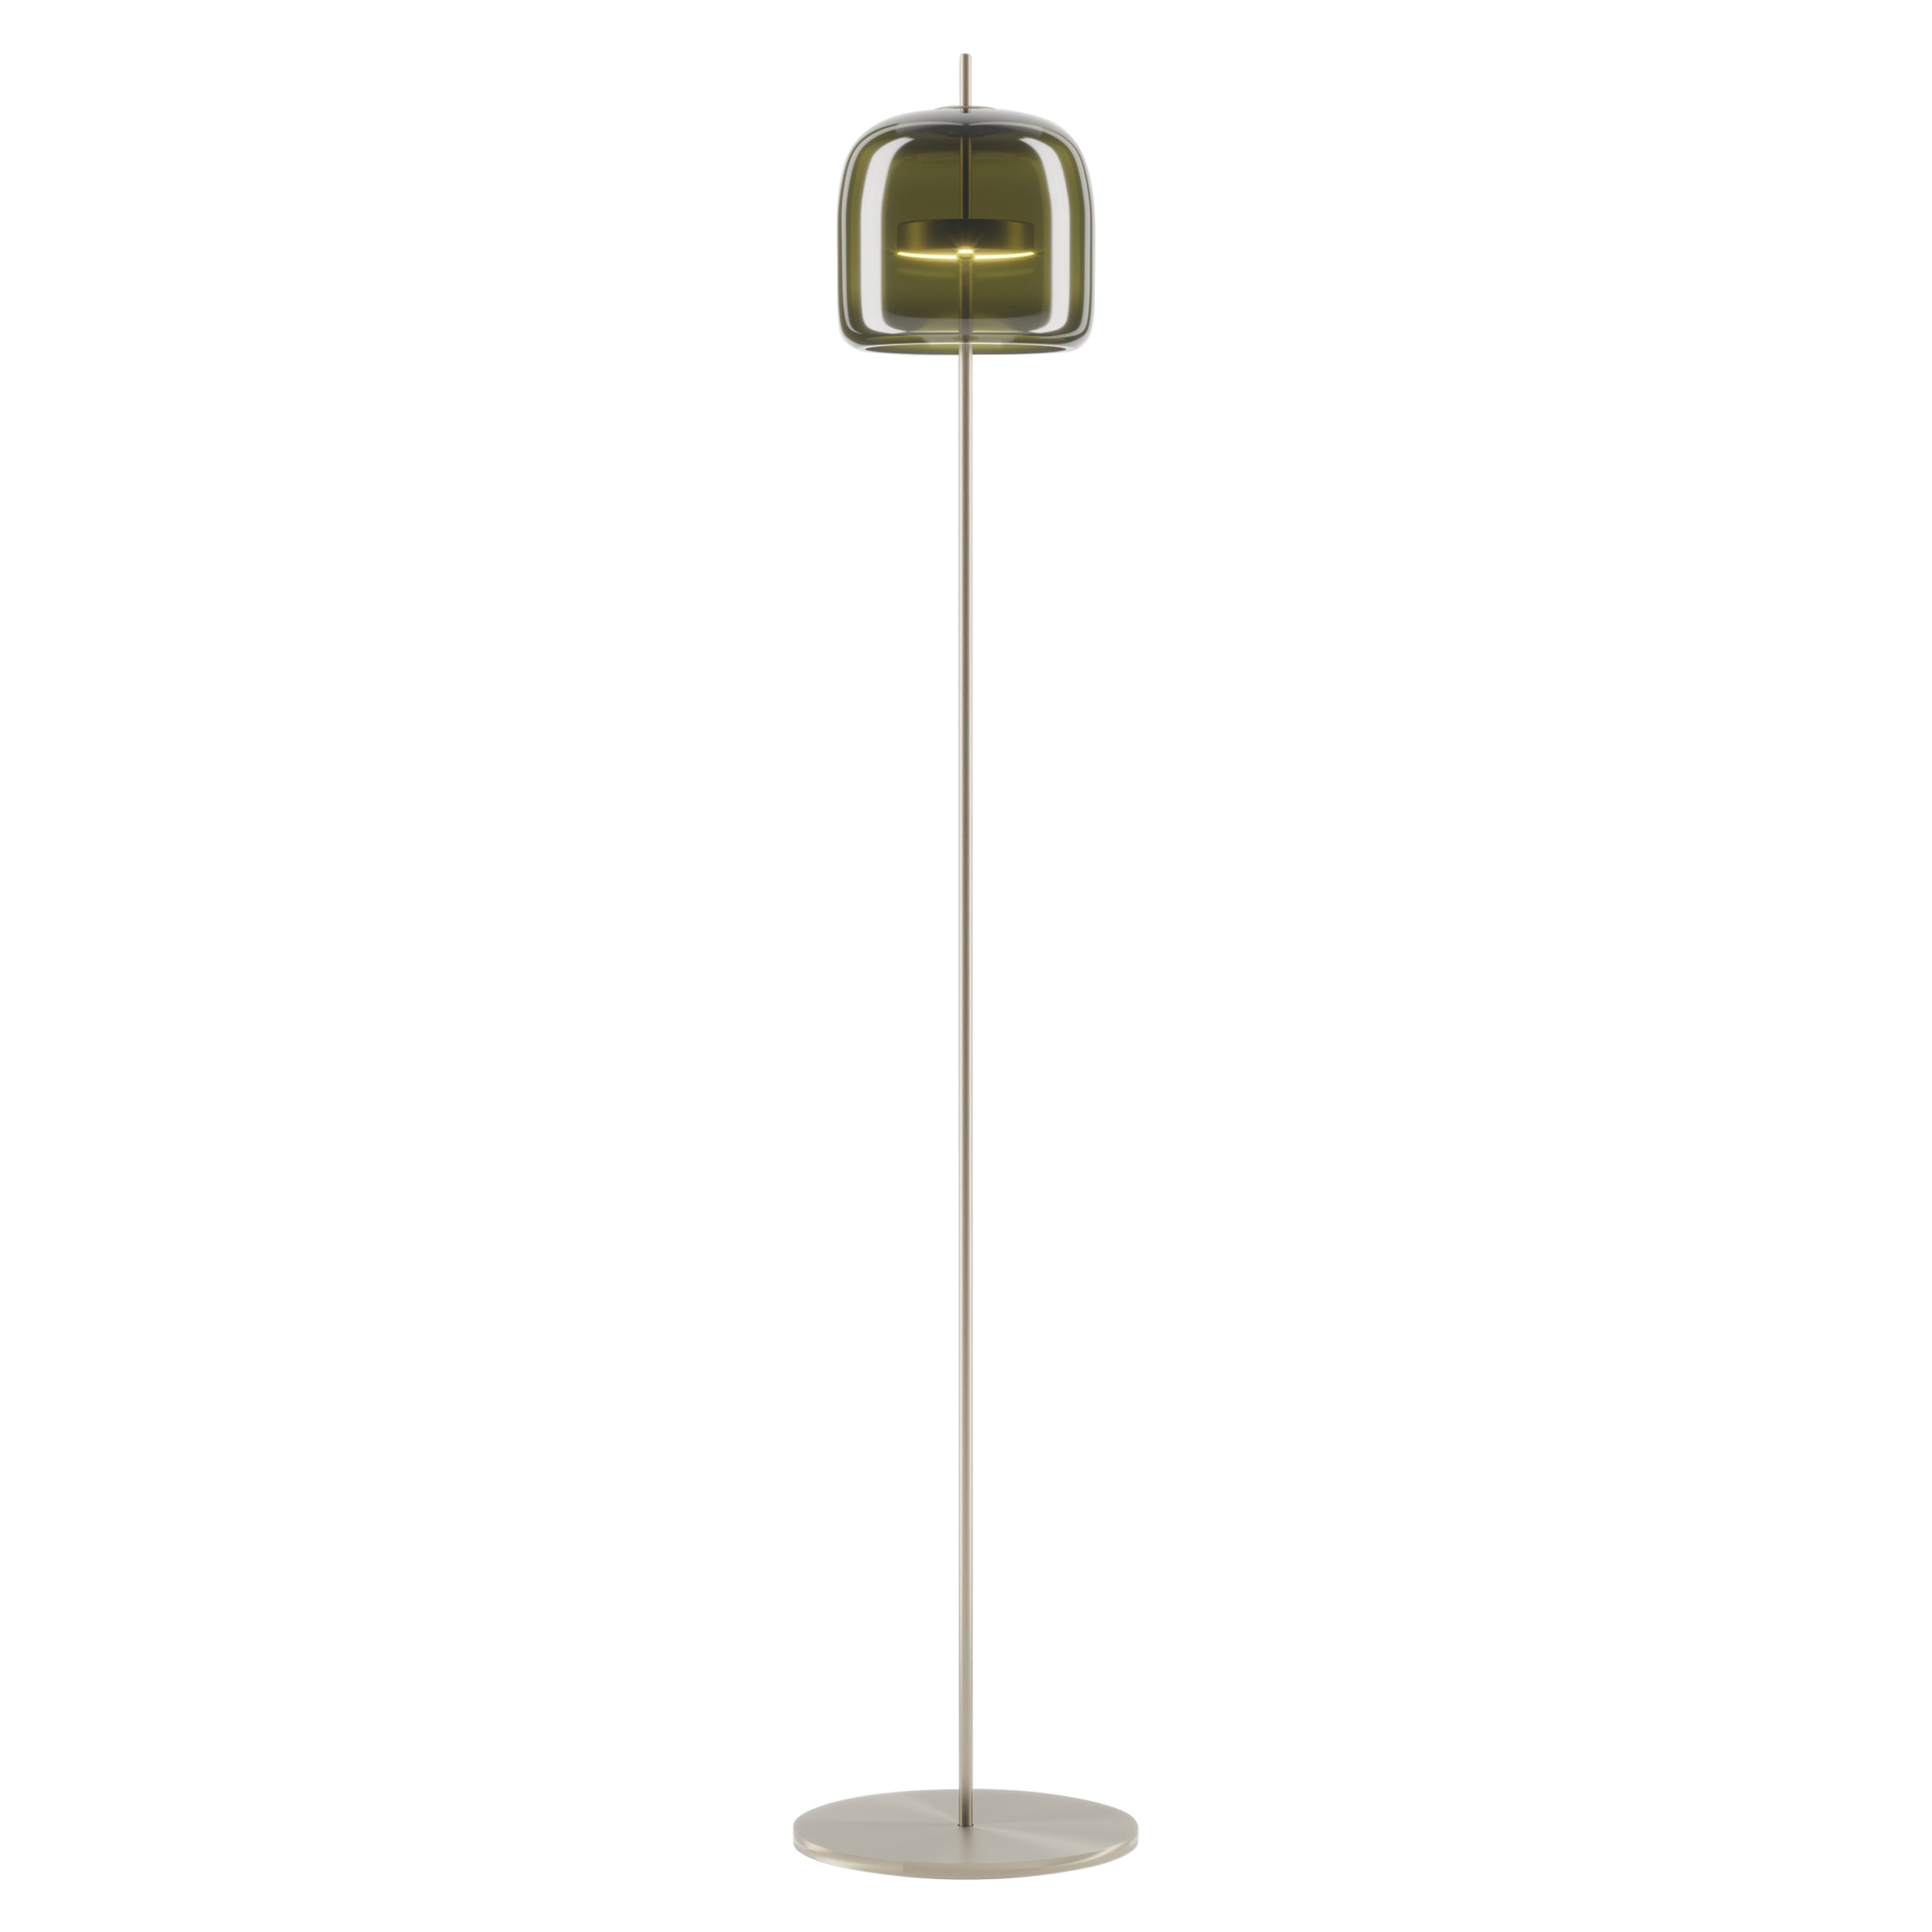 Vistosi Jube Floor Lamp in Old Green Transparent Glass With Matt Steel Finish For Sale